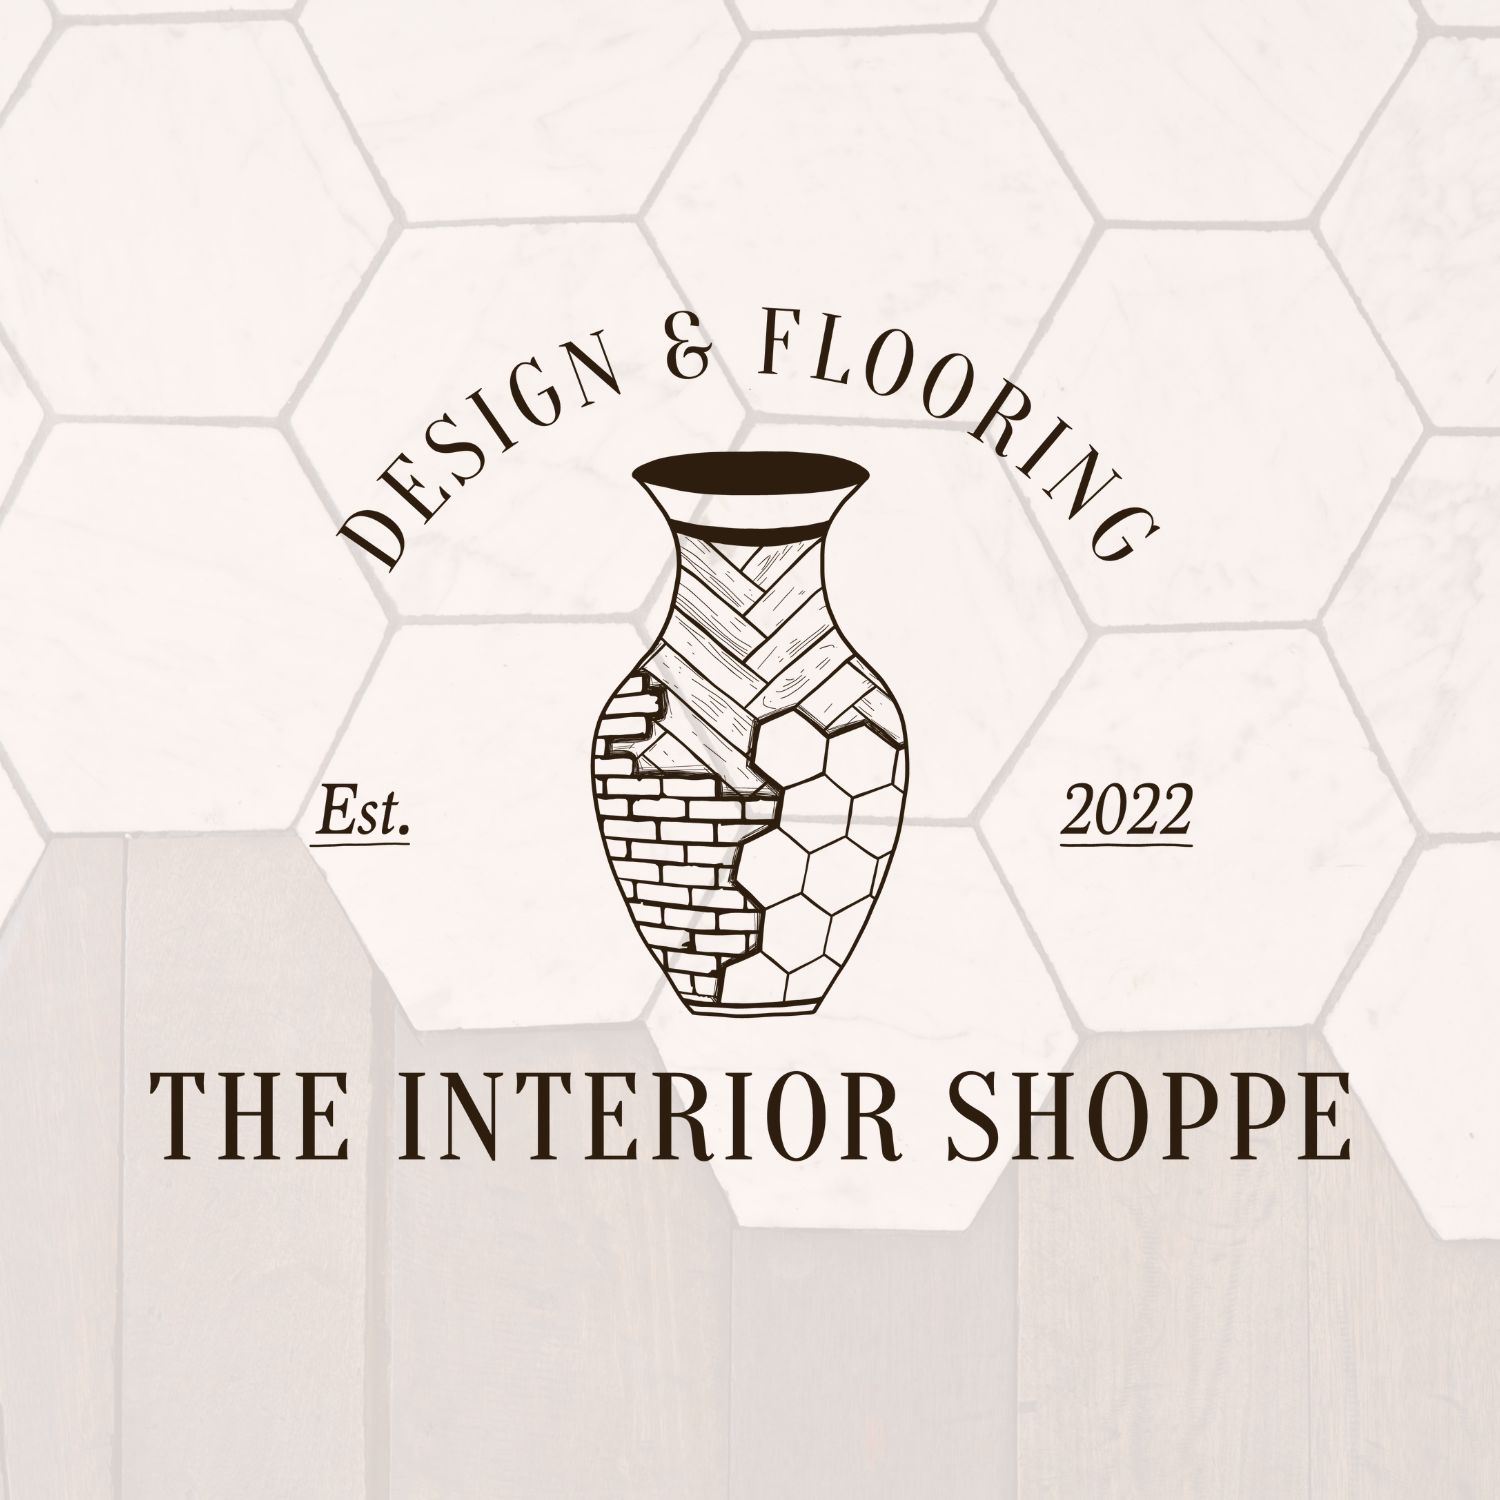 Primary logo for chic interior design studio, The Interior Shoppe